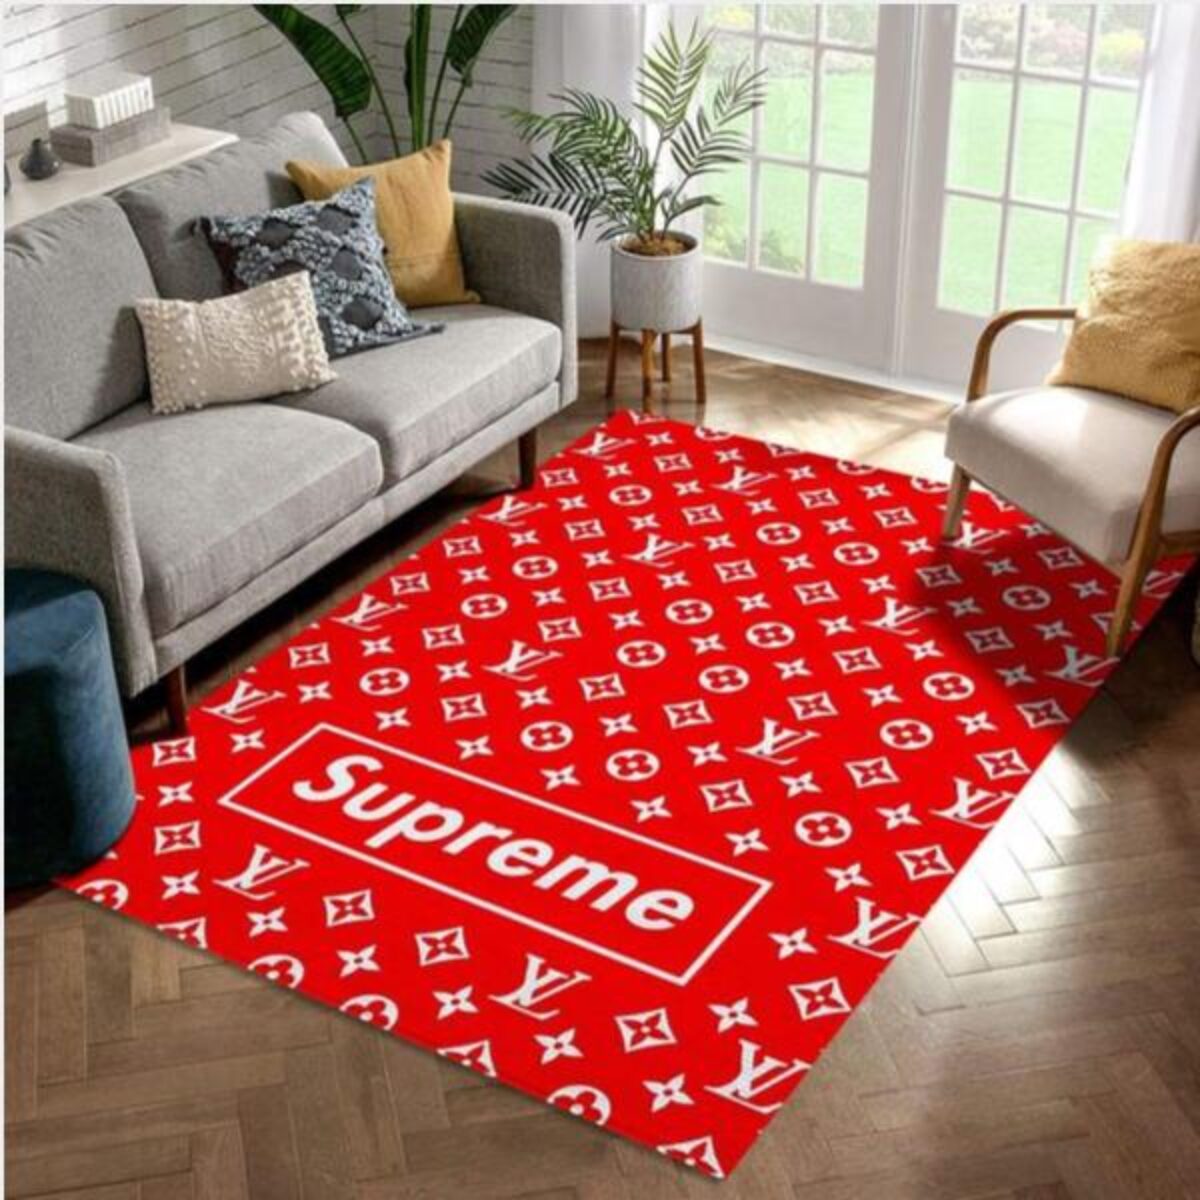 Louis vuitton area rugs living room carpet christmas gift floor